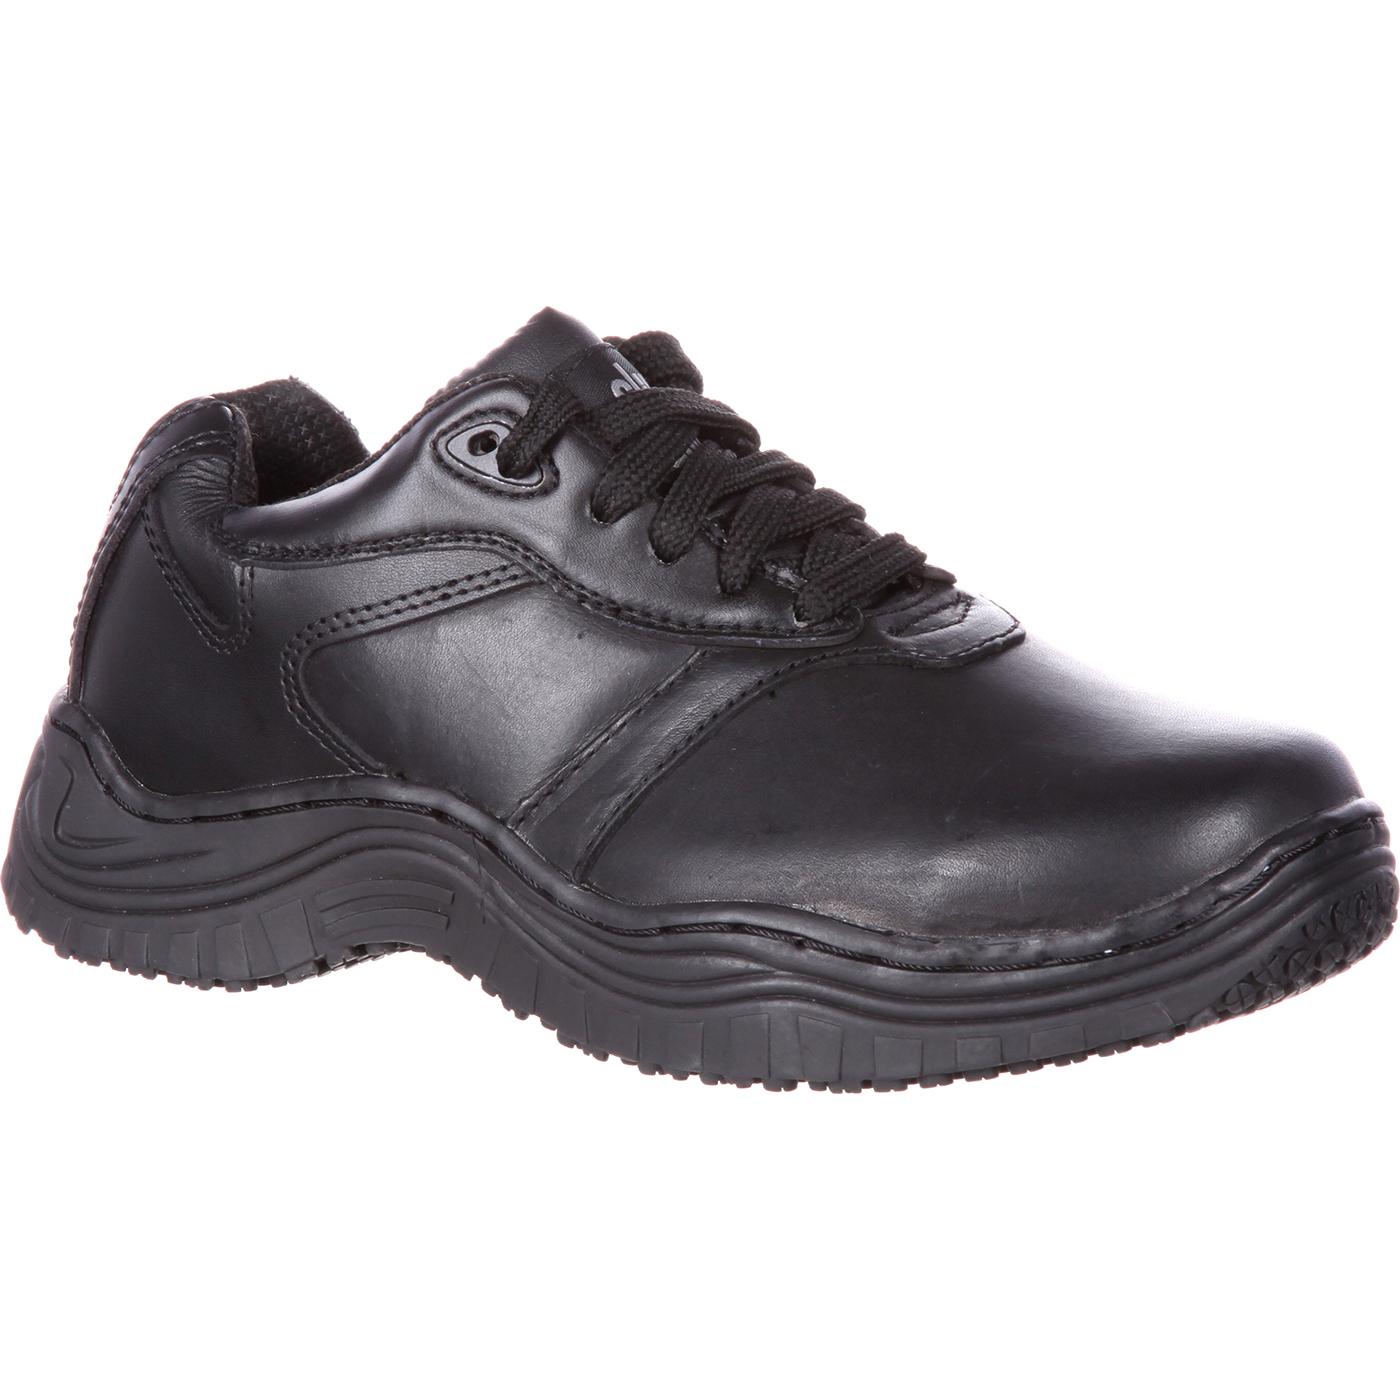 SlipGrips Women's Slip Resistant Athletic Work Shoes, #7564